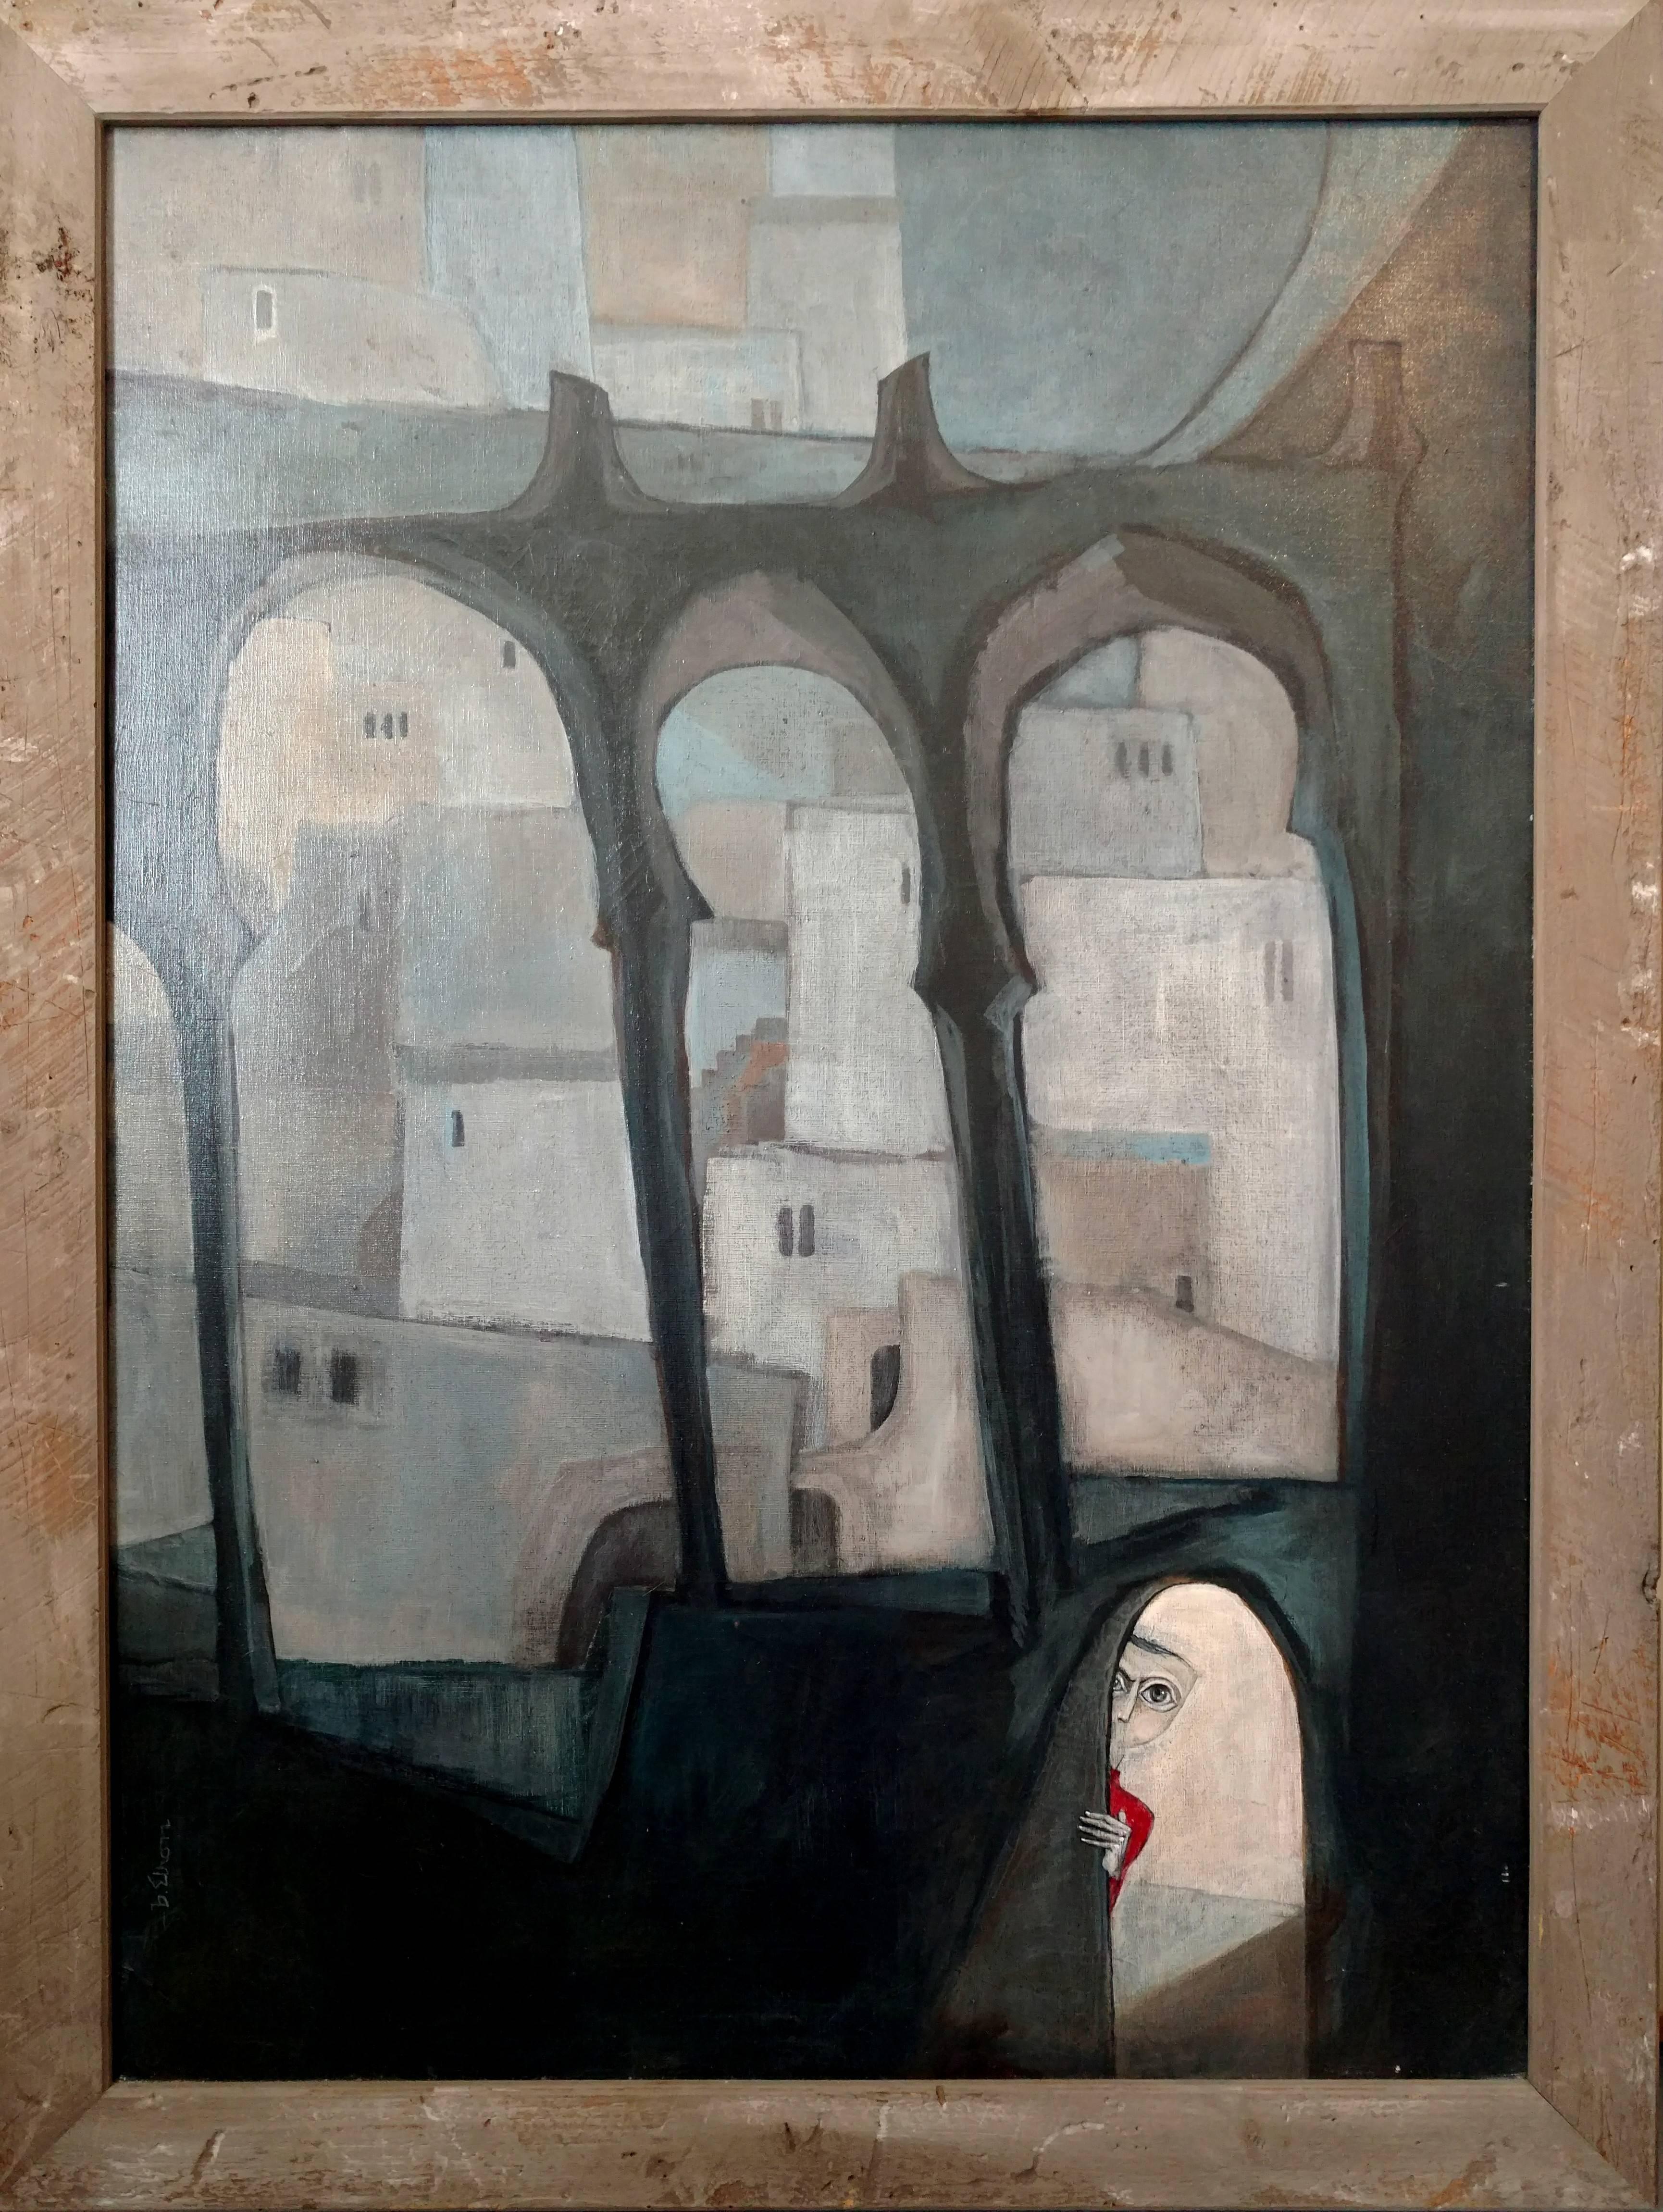 Baruch Elron Figurative Painting - Large Surrealist Symbolist Painting, Peeking Child, Moorish Architectural Arches